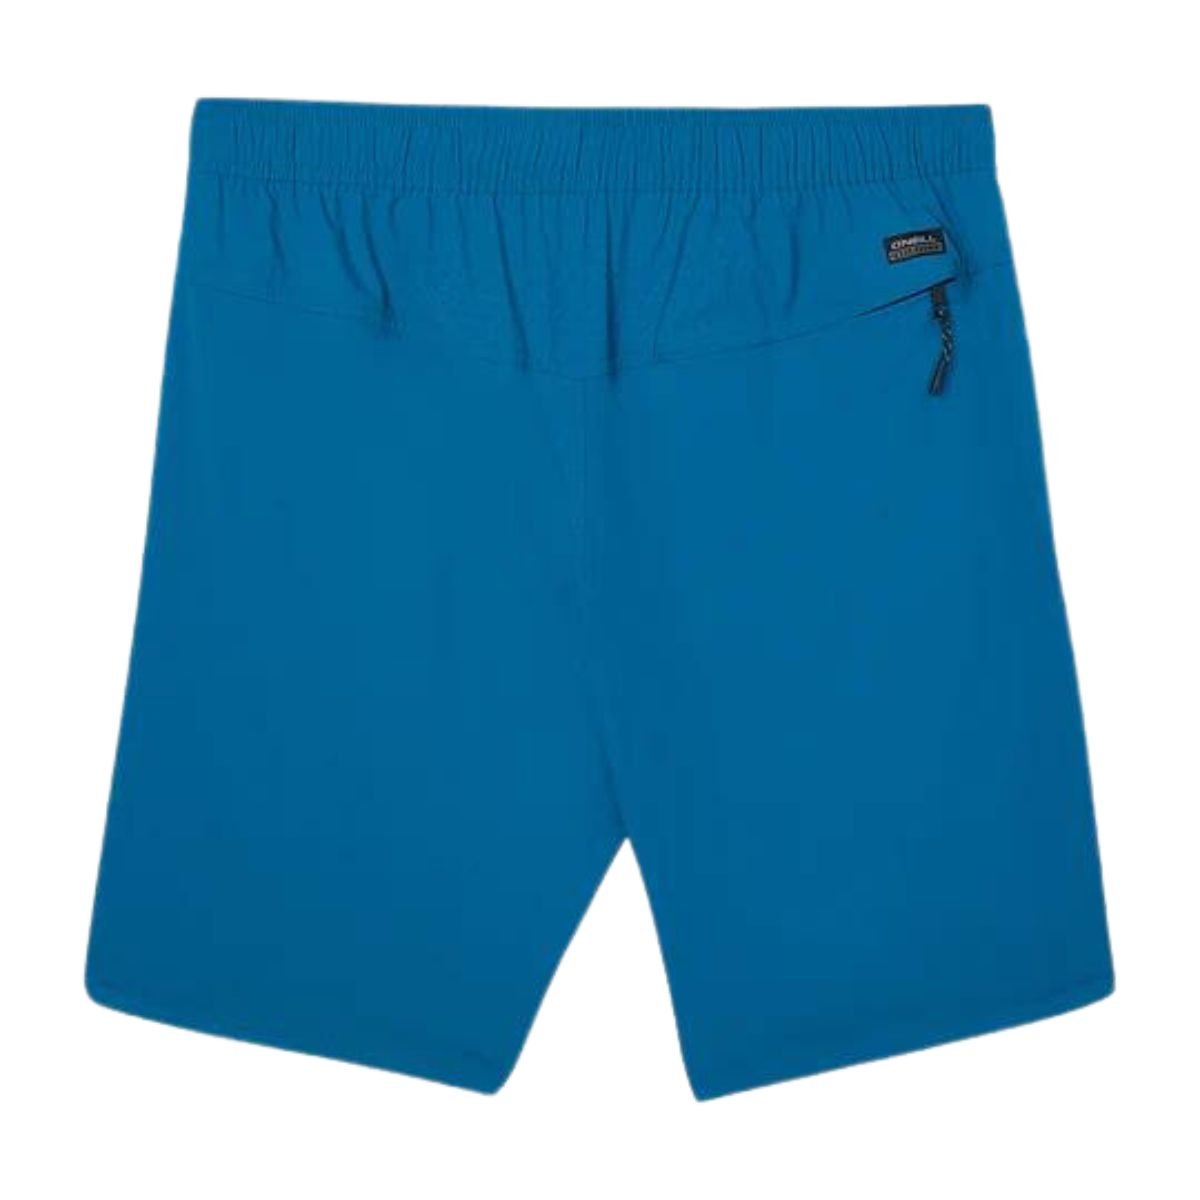 O'Neill TRVLR Camino 18" Hybrid Shorts in Bay Blue - BoardCo